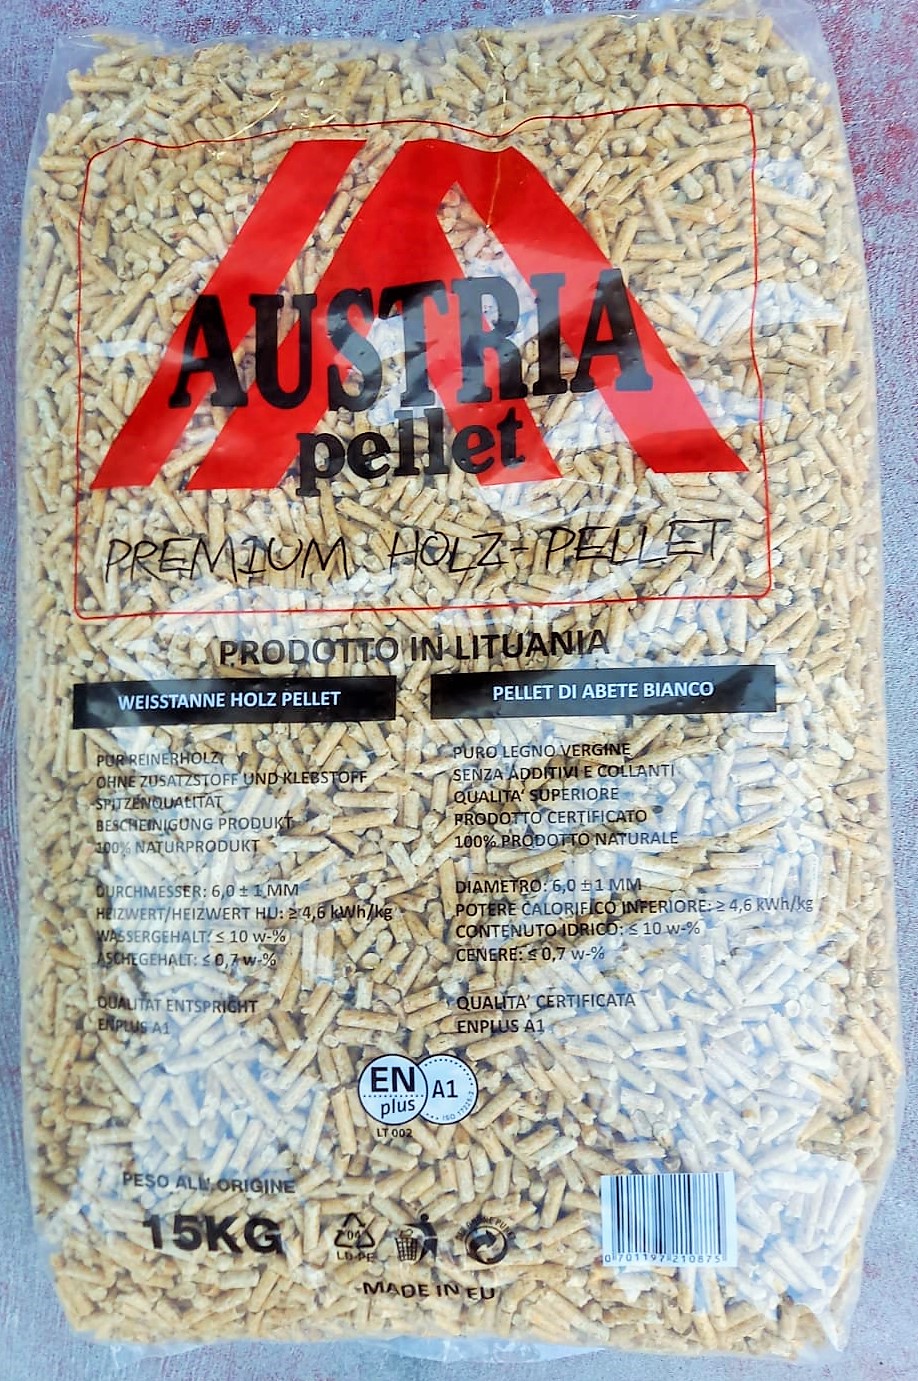 Austria Pellets